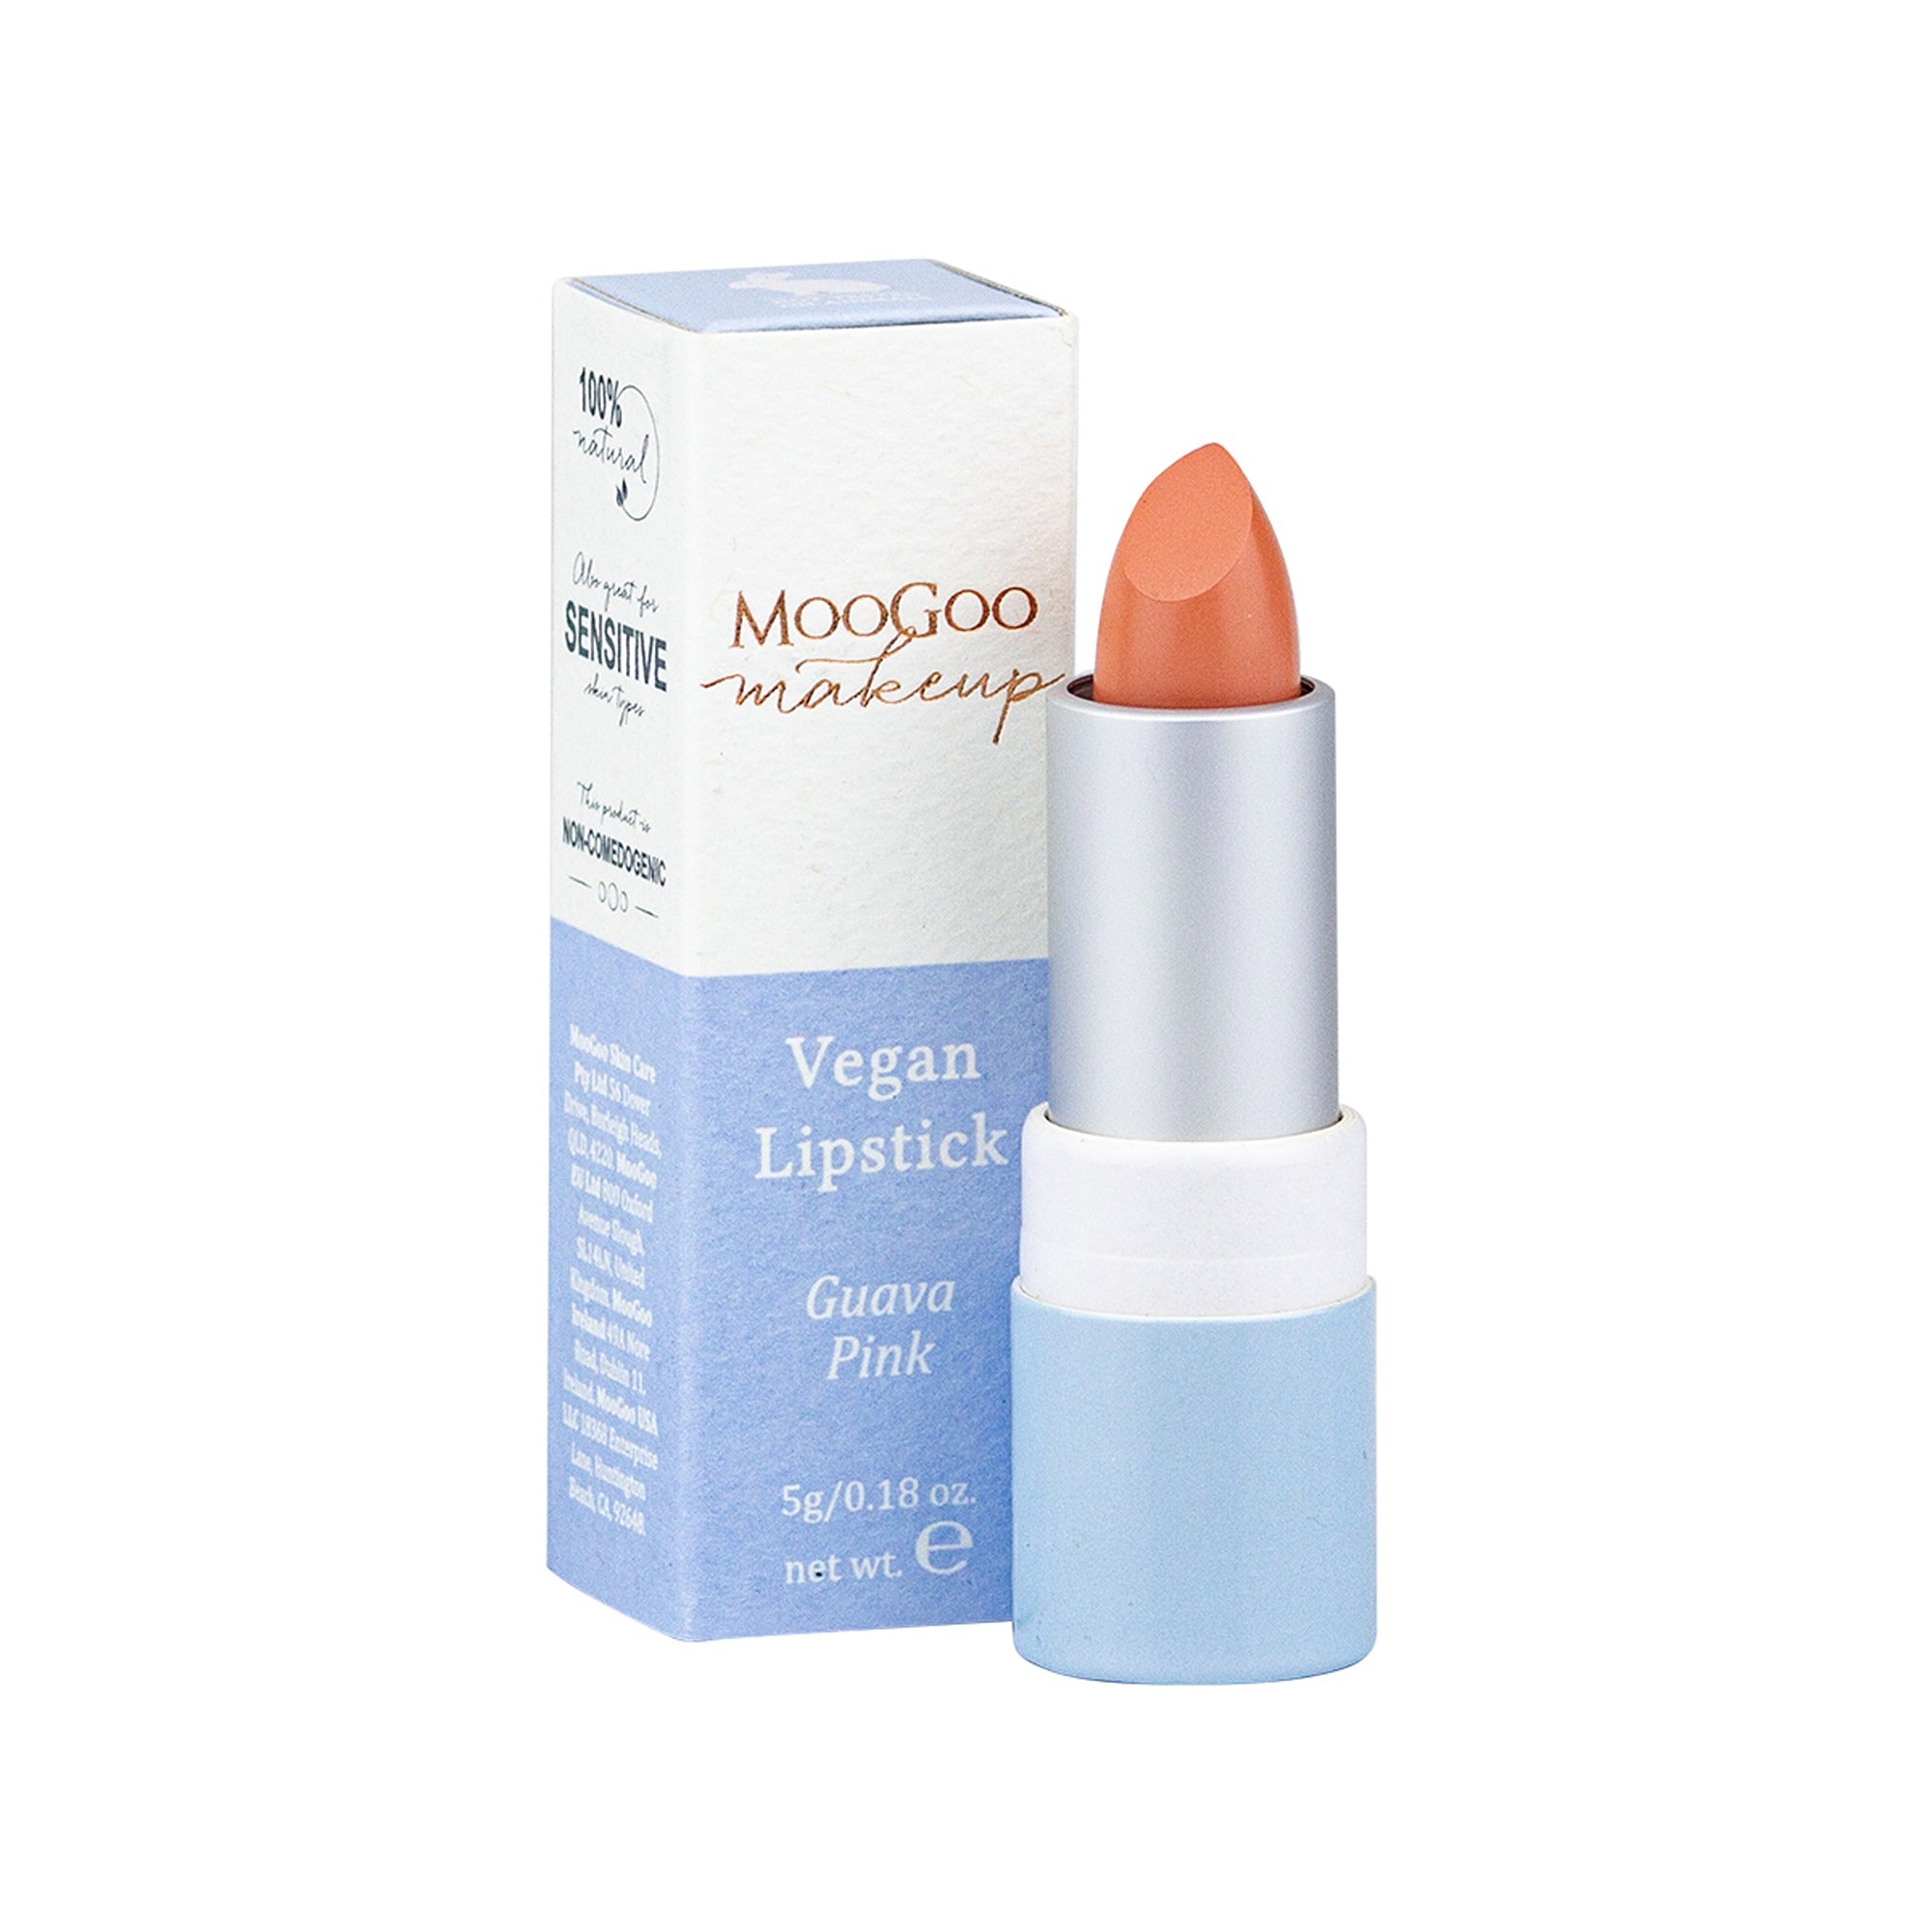 Moogoo Vegan Lipstick 5g - Guava Pink